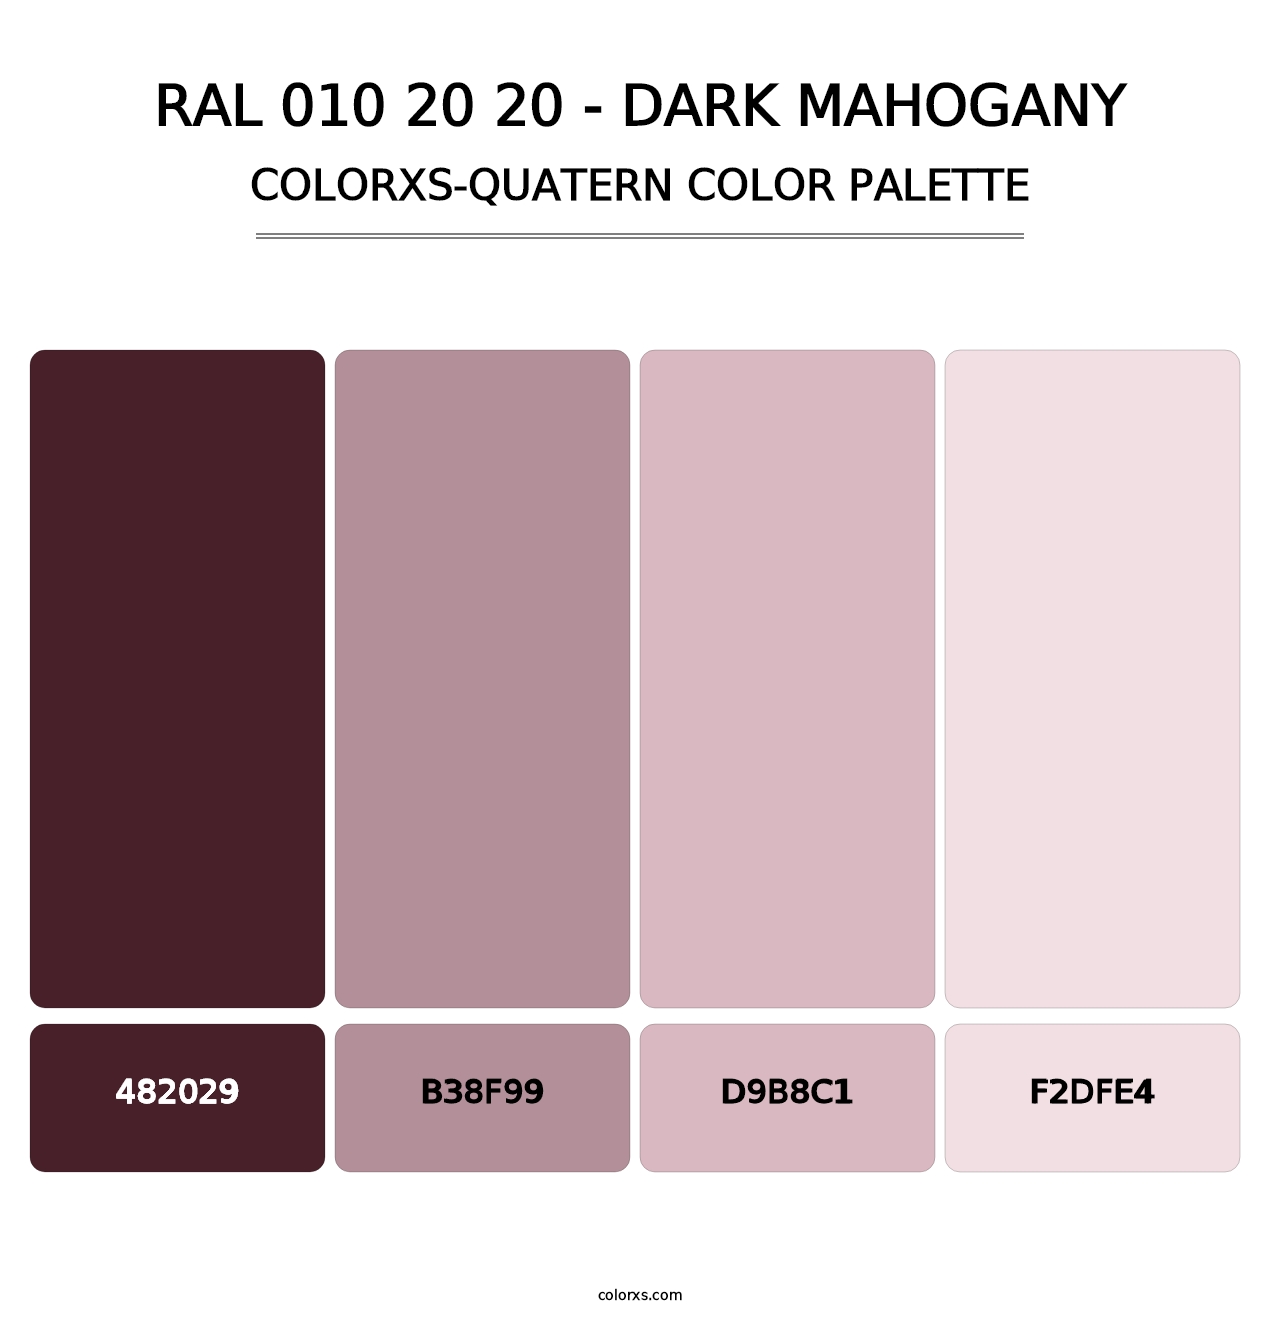 RAL 010 20 20 - Dark Mahogany - Colorxs Quatern Palette